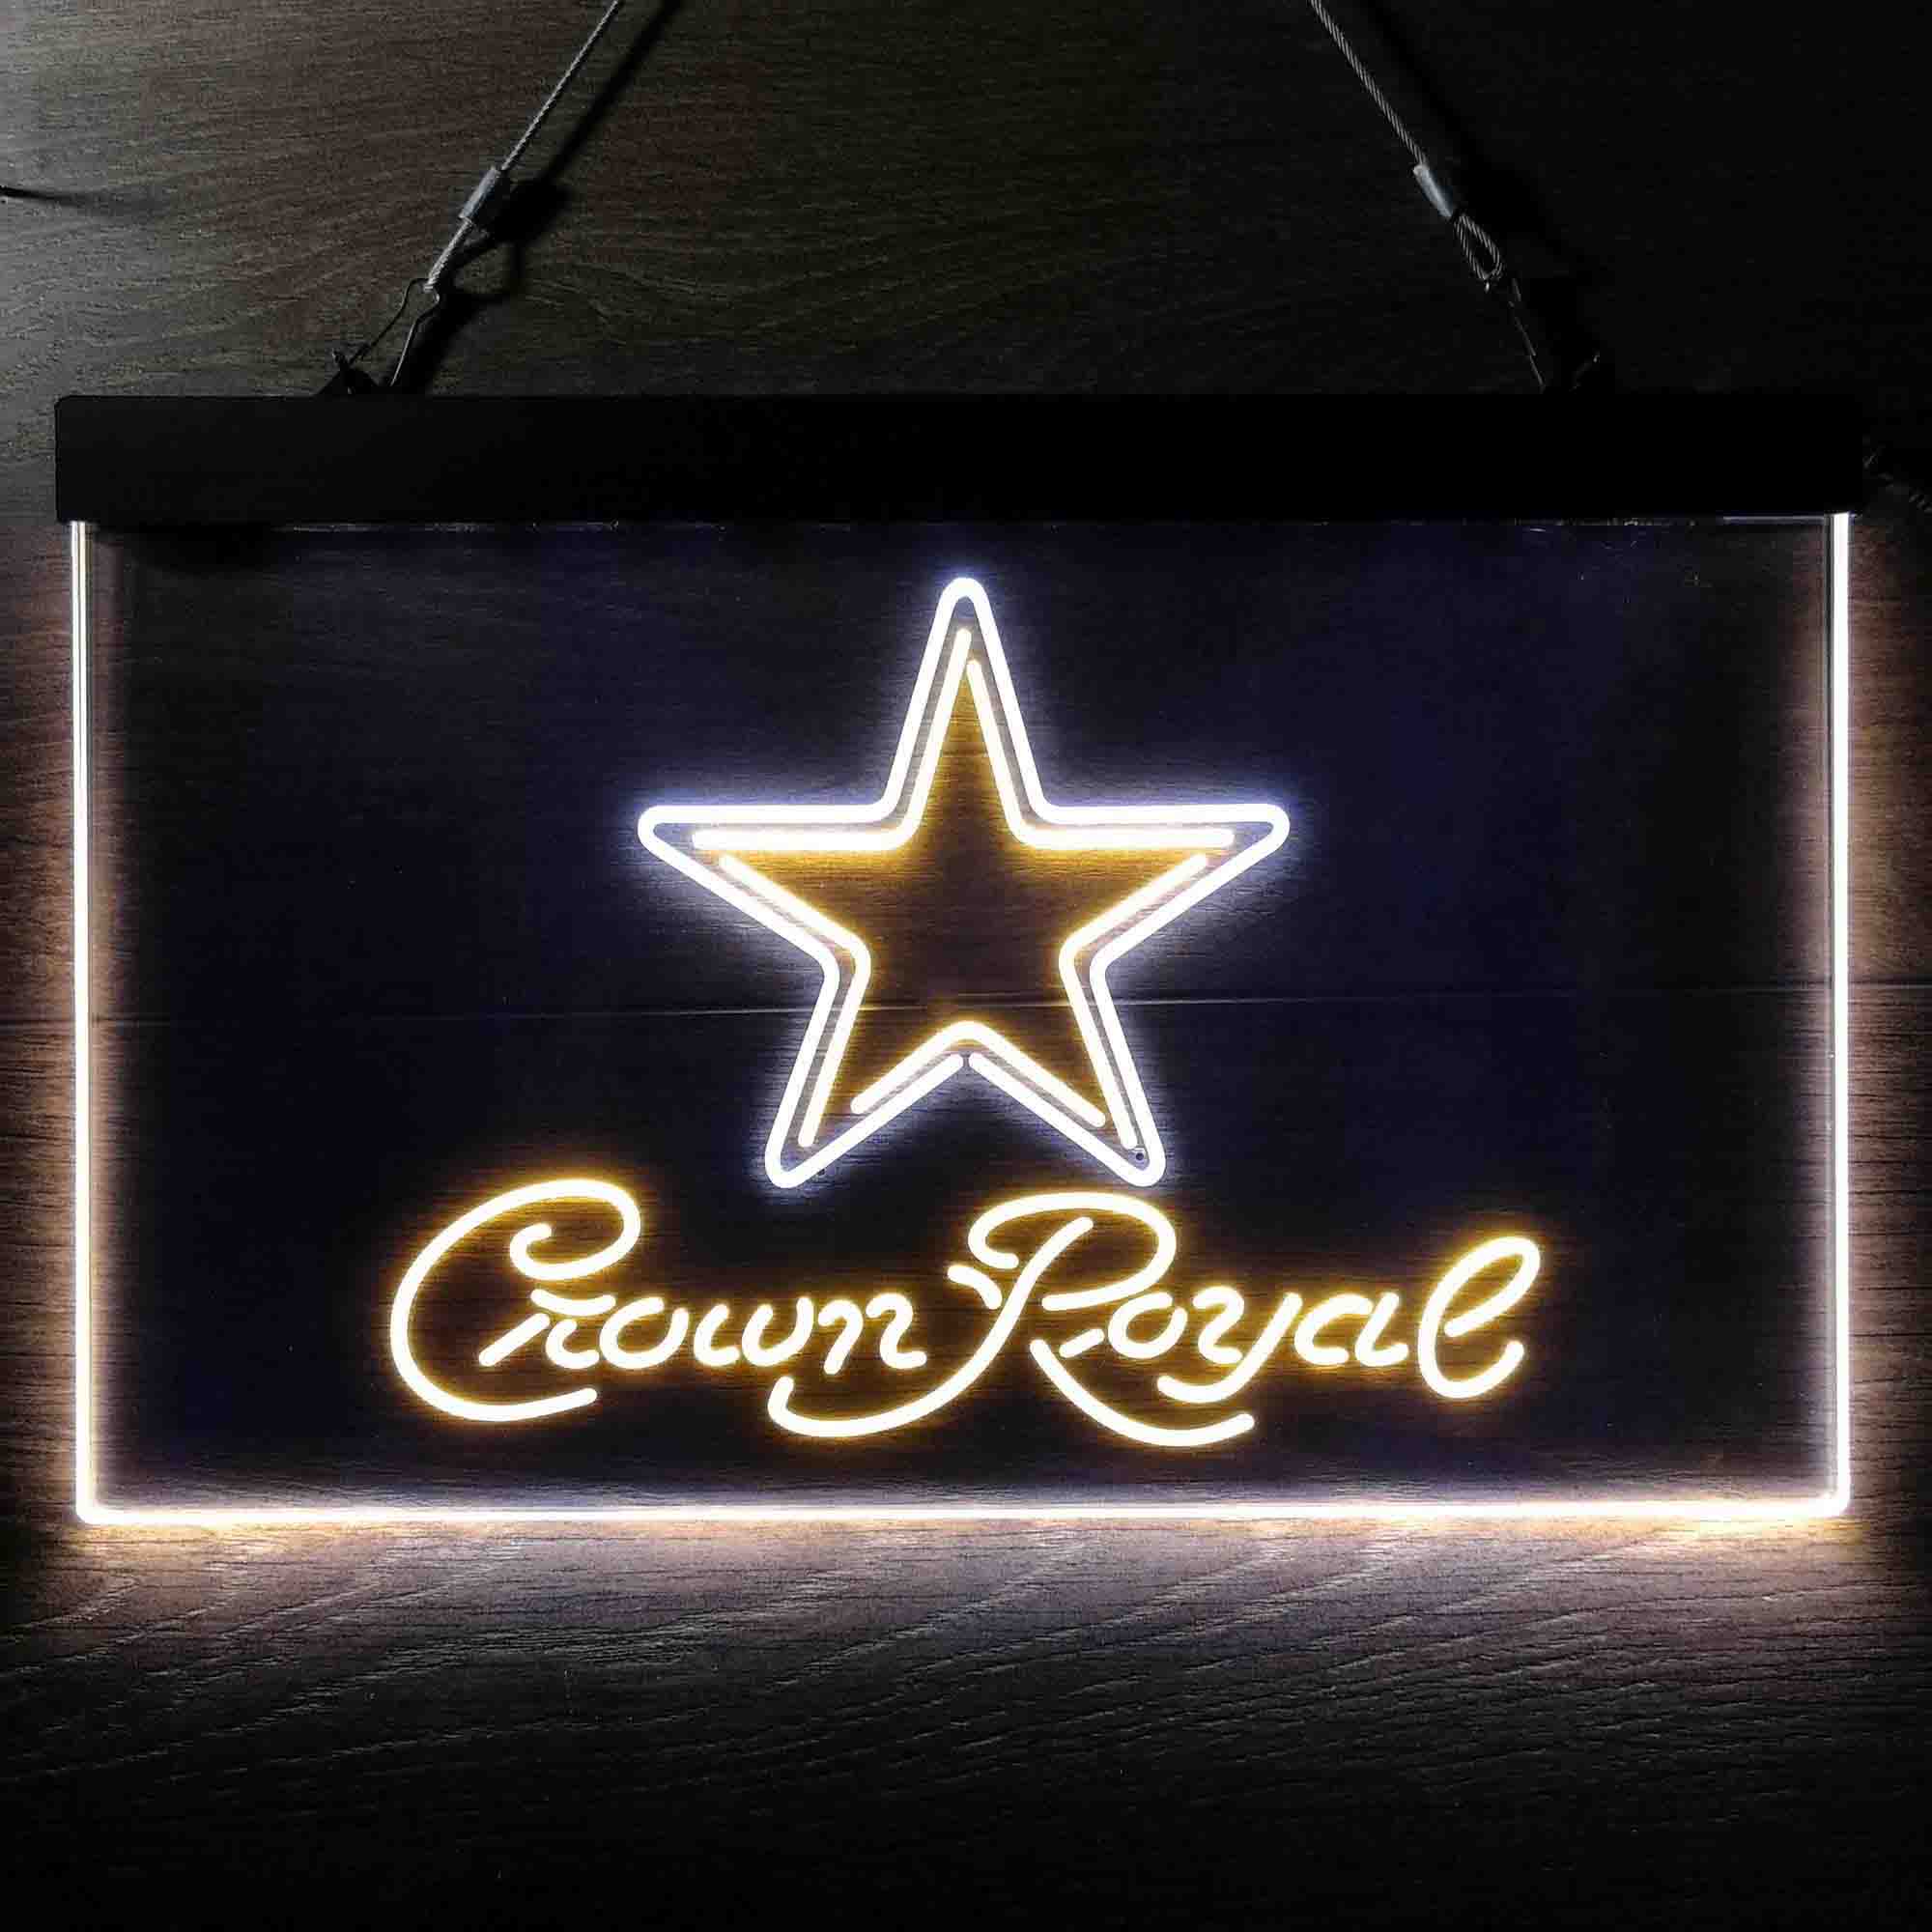 Crown Royal Bar Dallas Cowboys Est. 1960 Neon-Like LED Sign